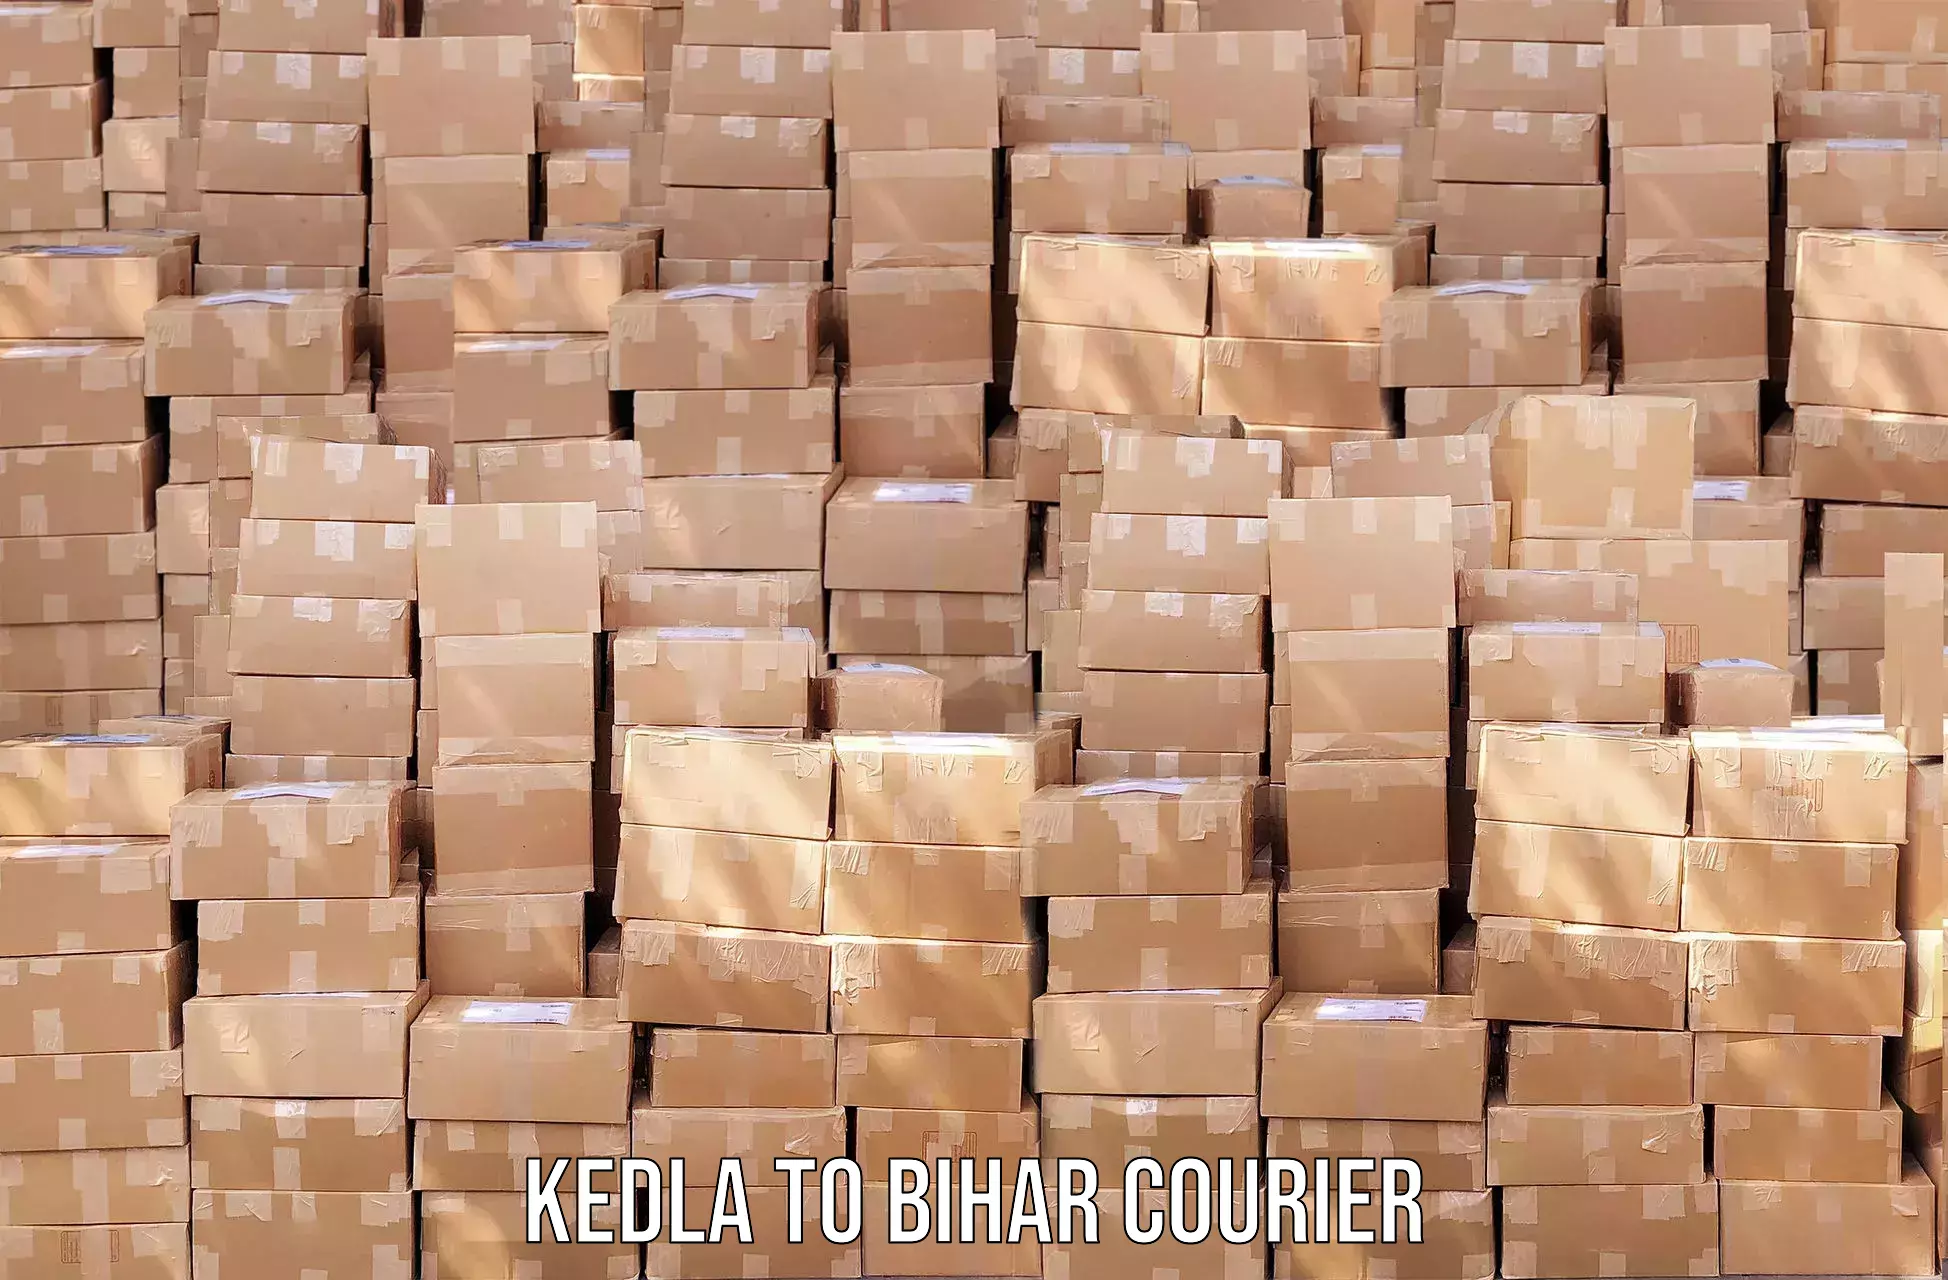 Pharmaceutical courier Kedla to Korha